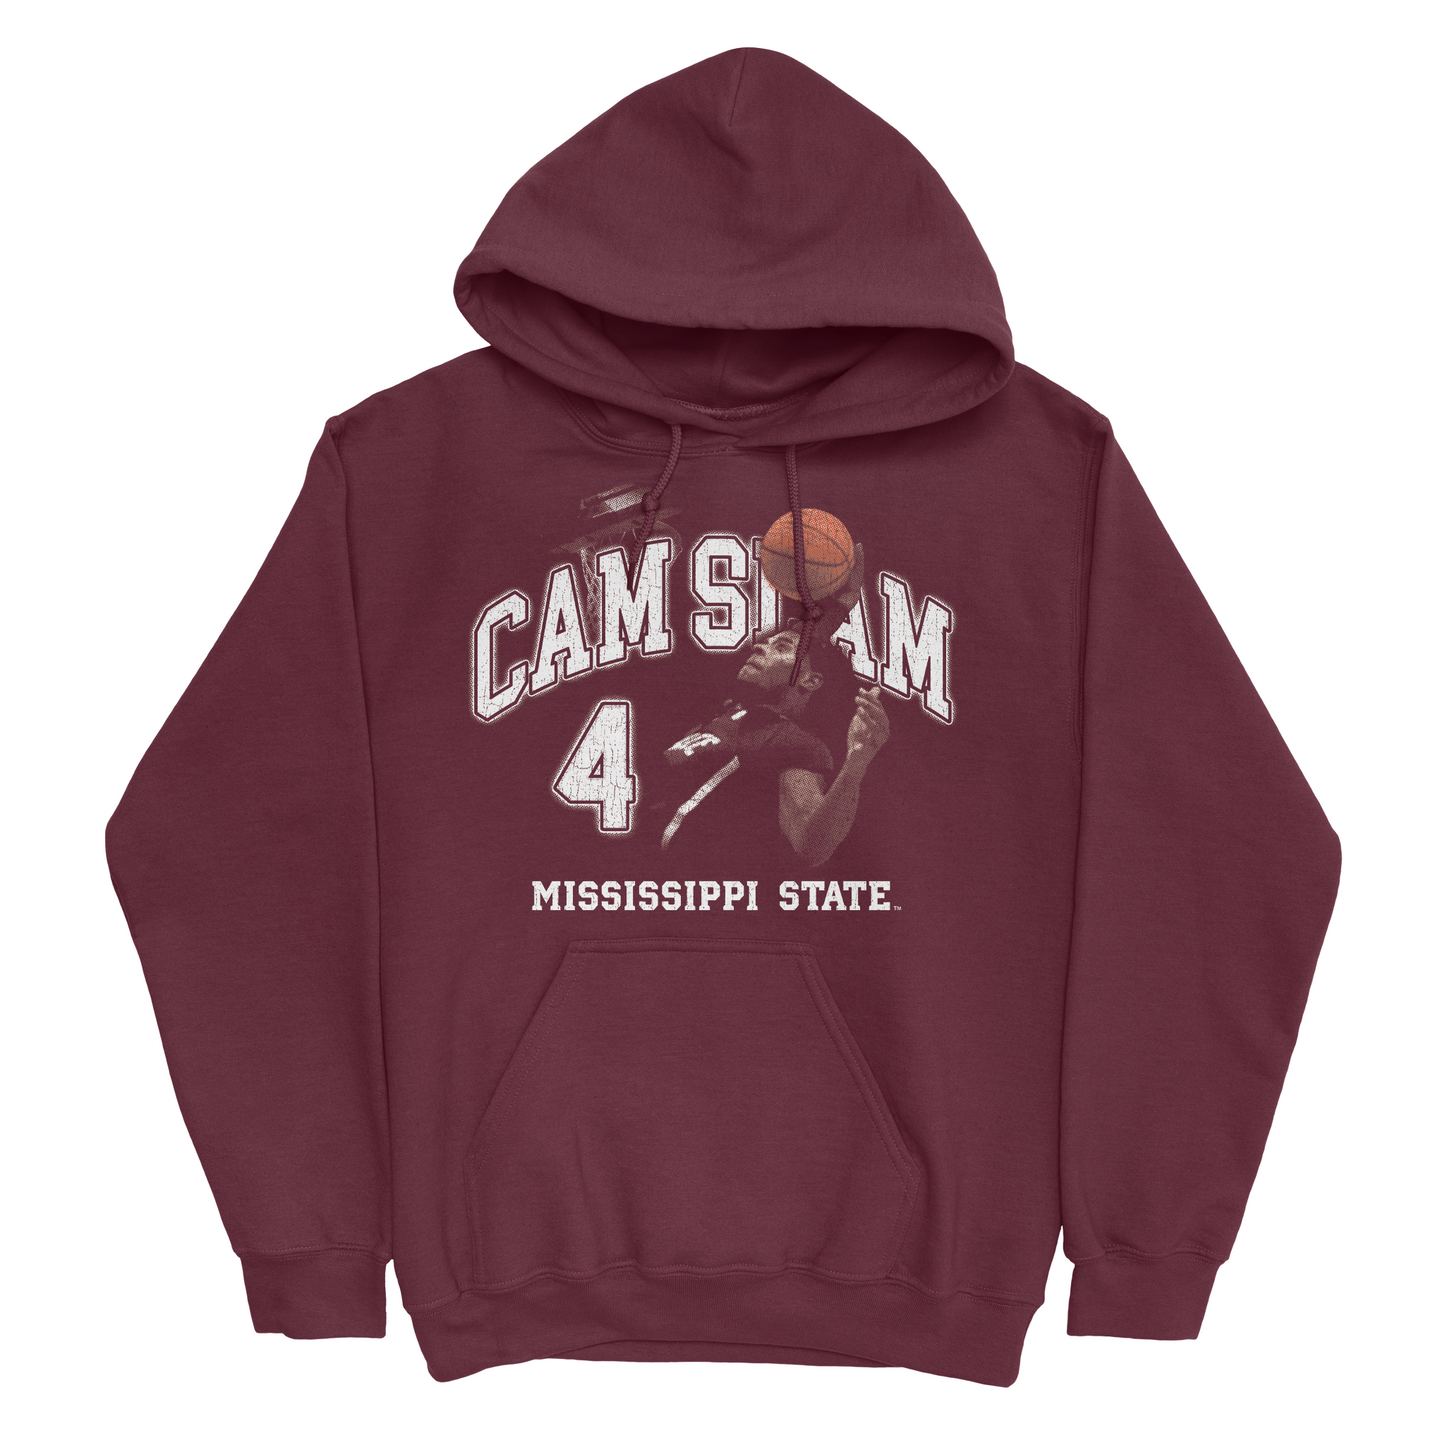 EXCLUSIVE RELEASE: Cam Slam Hoodie